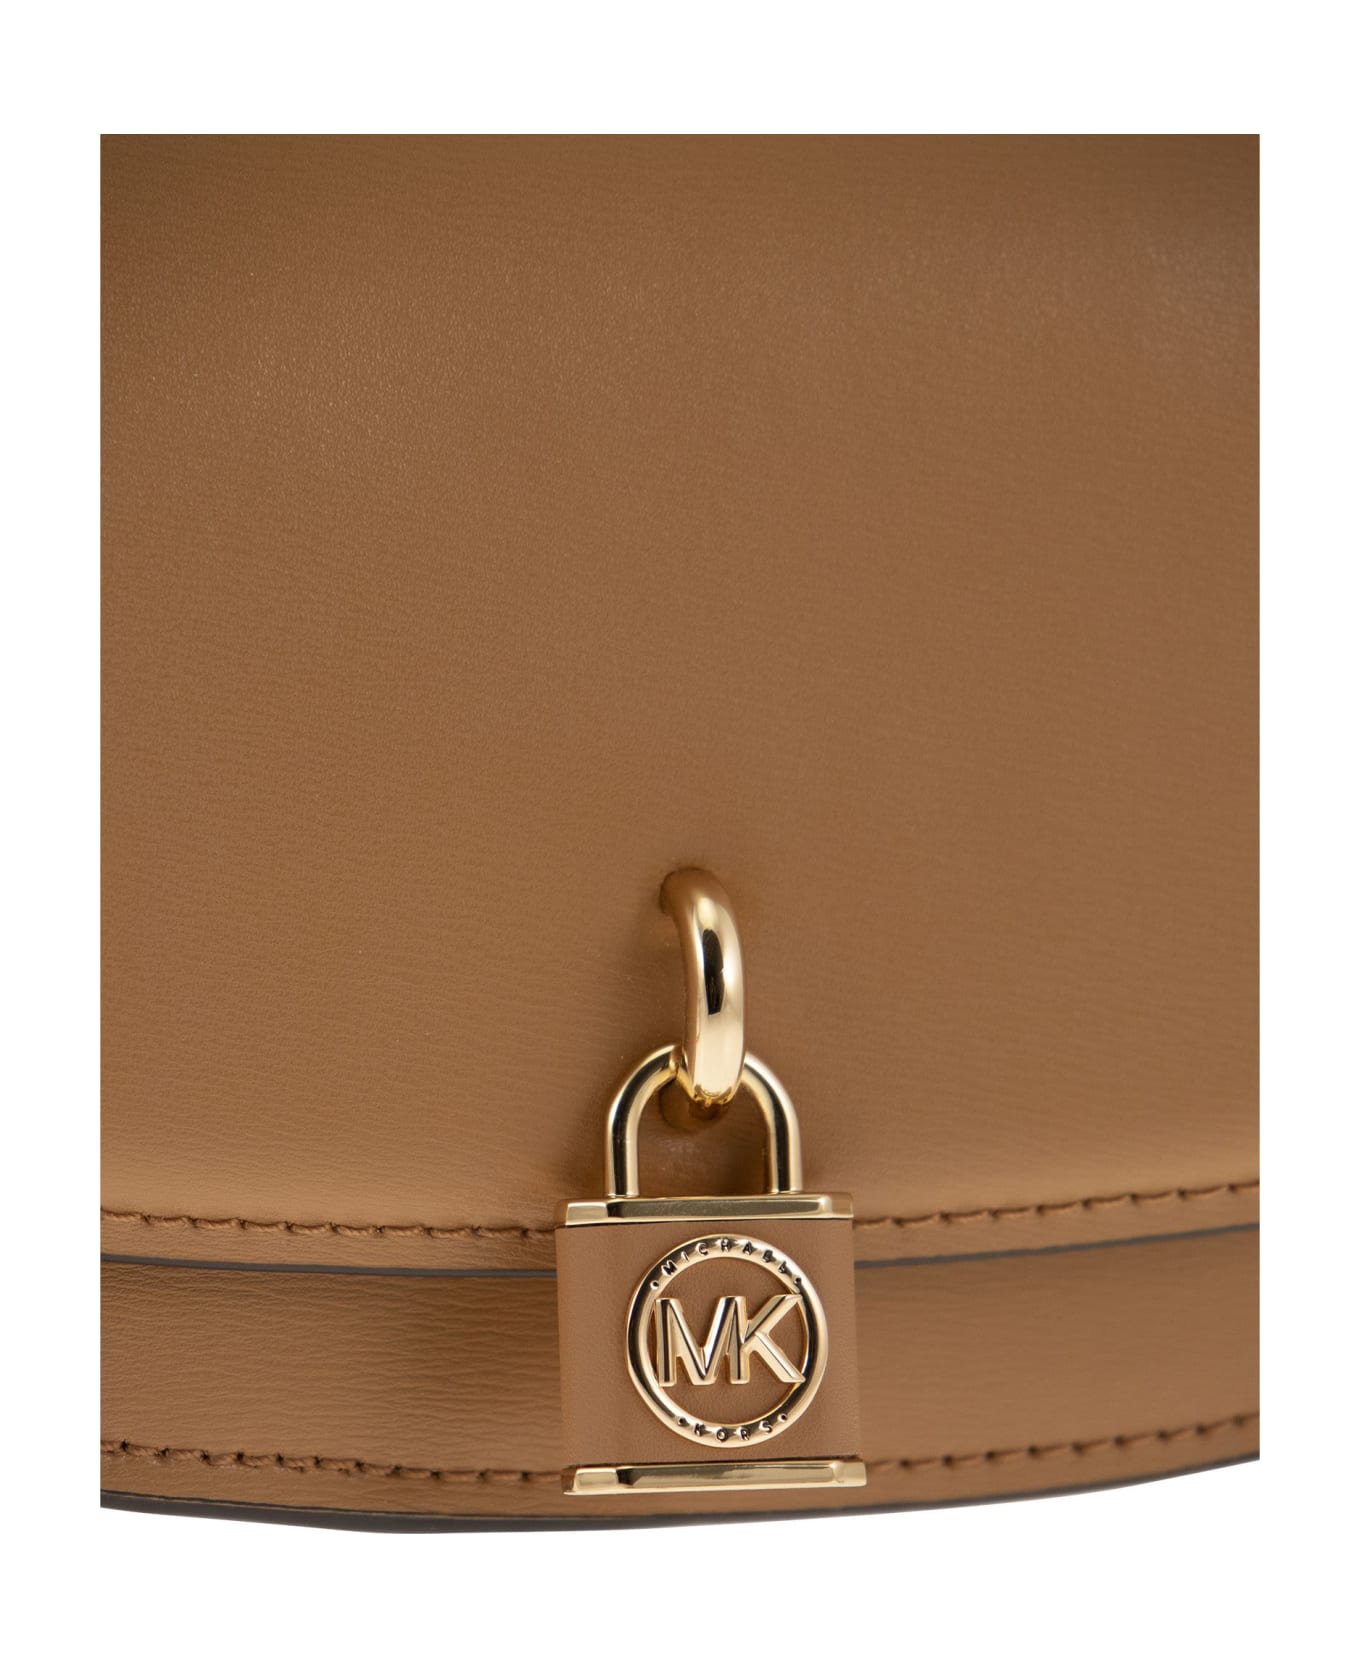 Michael Kors Mila Shoulder Bag In Leather Color Leather - Peanuts